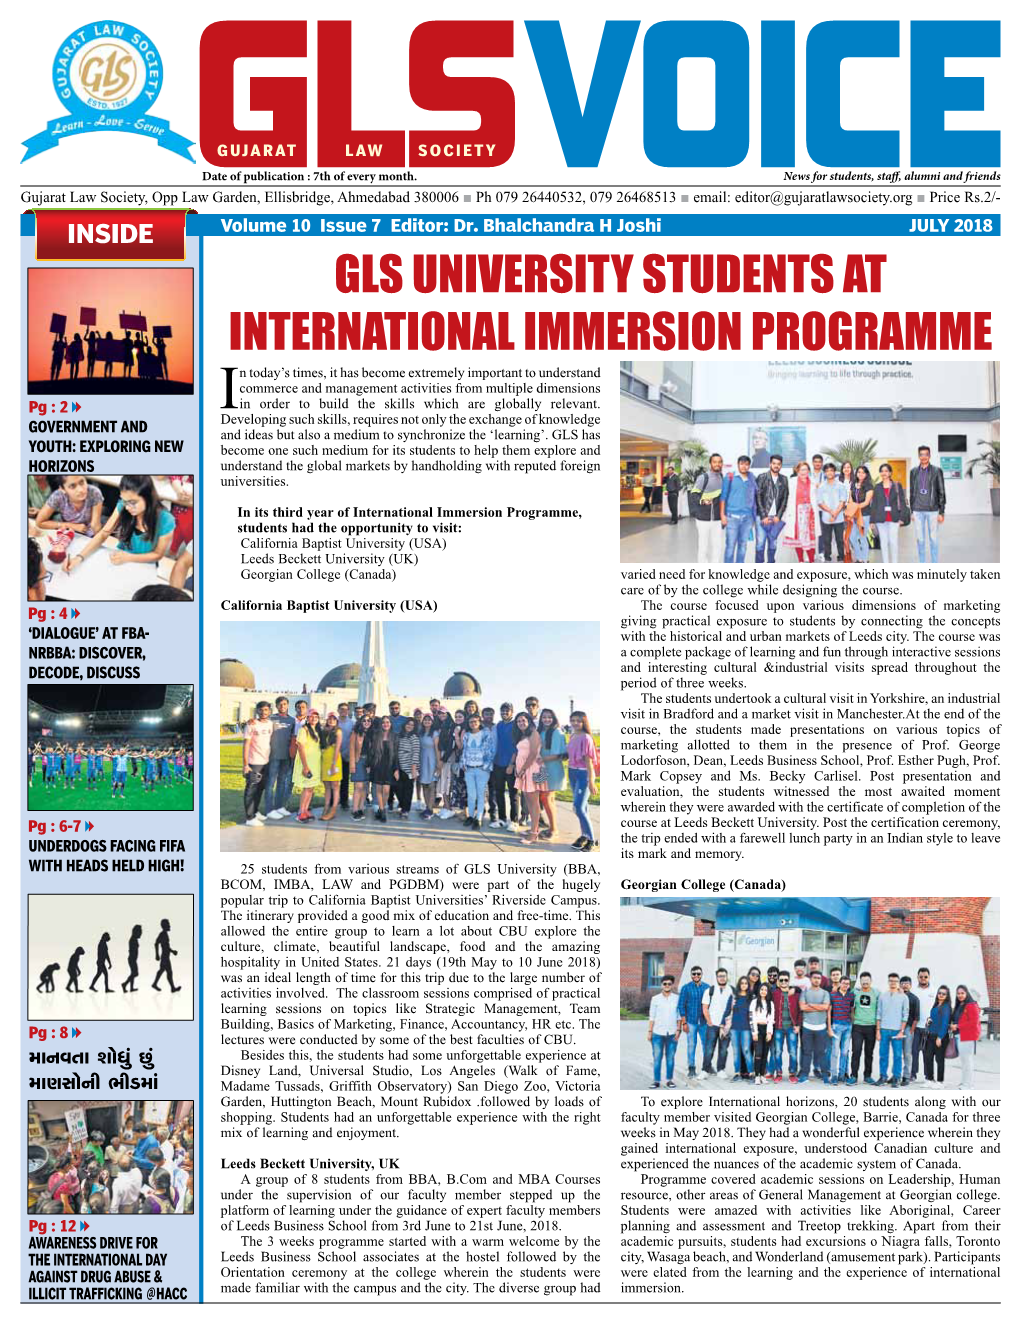 Gls University Students at International Immersion